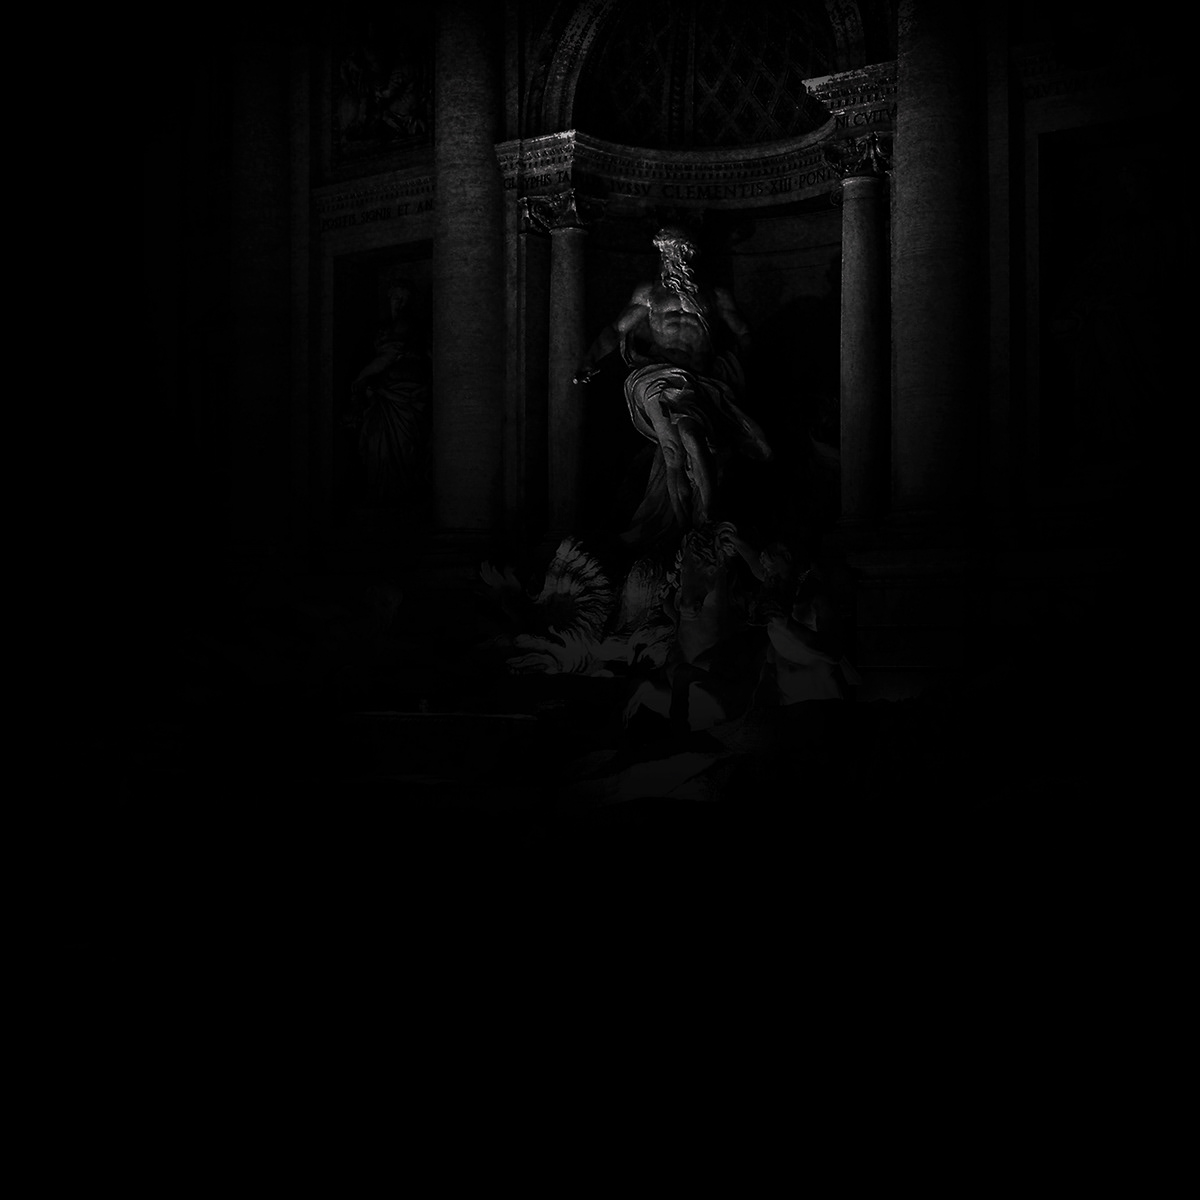 Rome bw nerone Black&white bianco e nero low-key